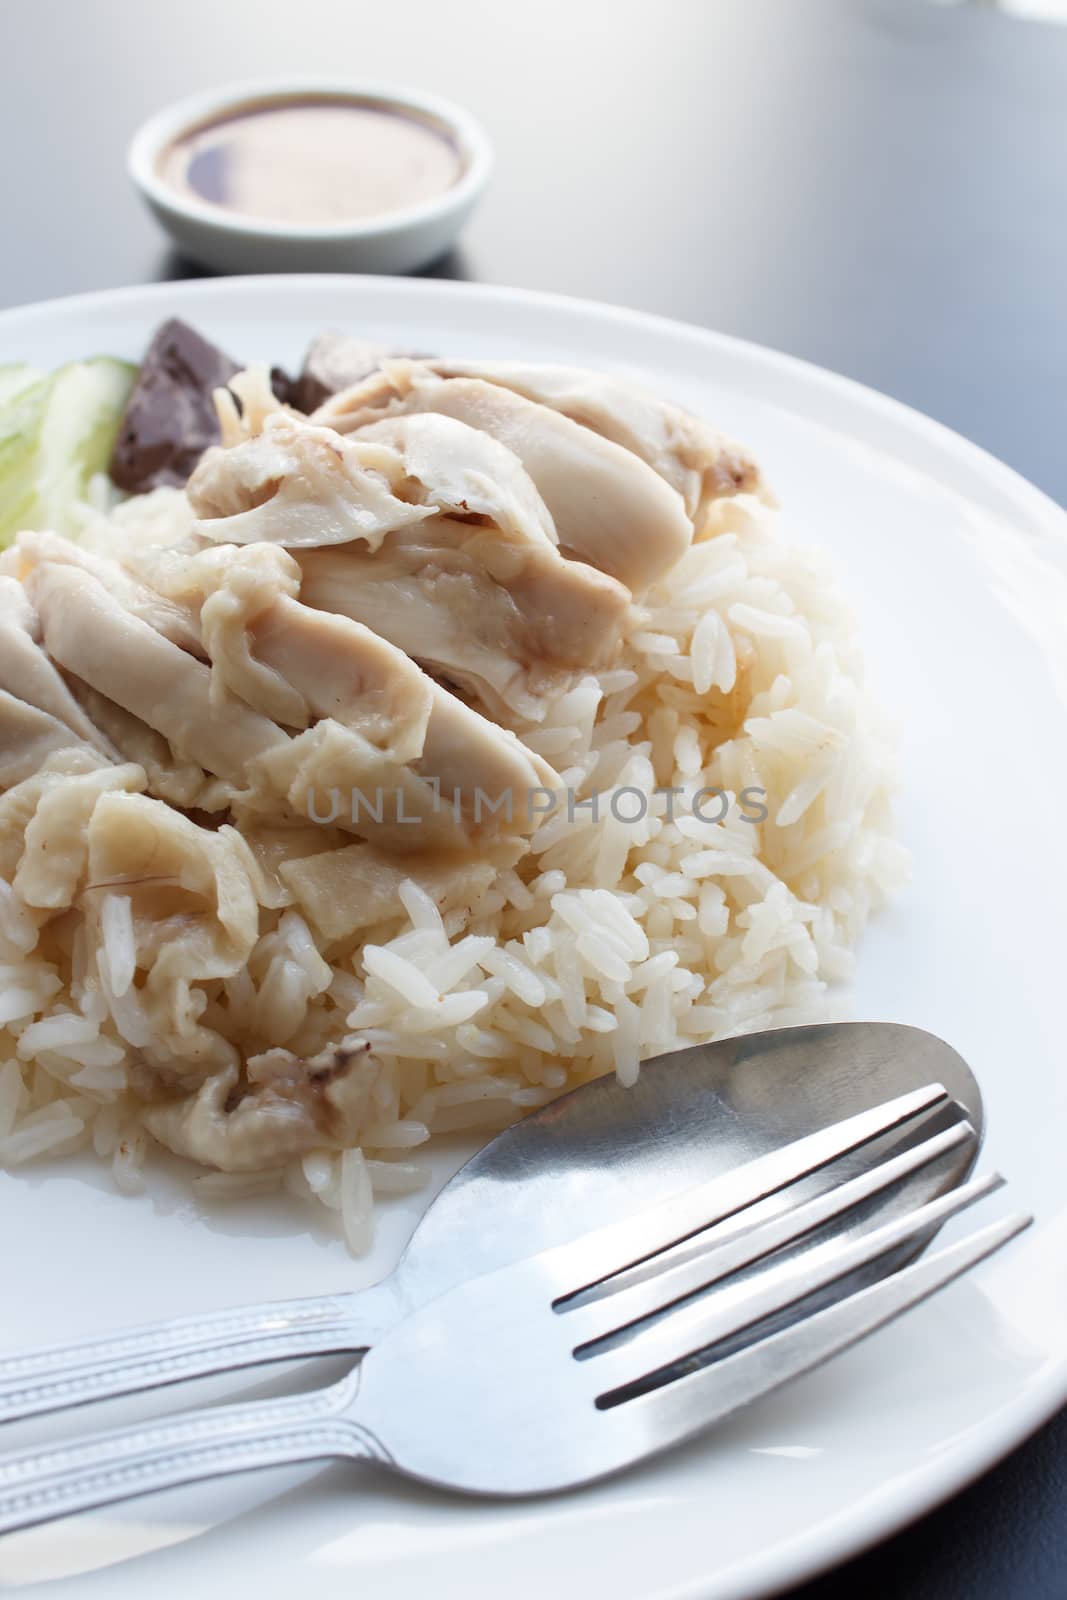 Hainanese chicken rice by vitawin